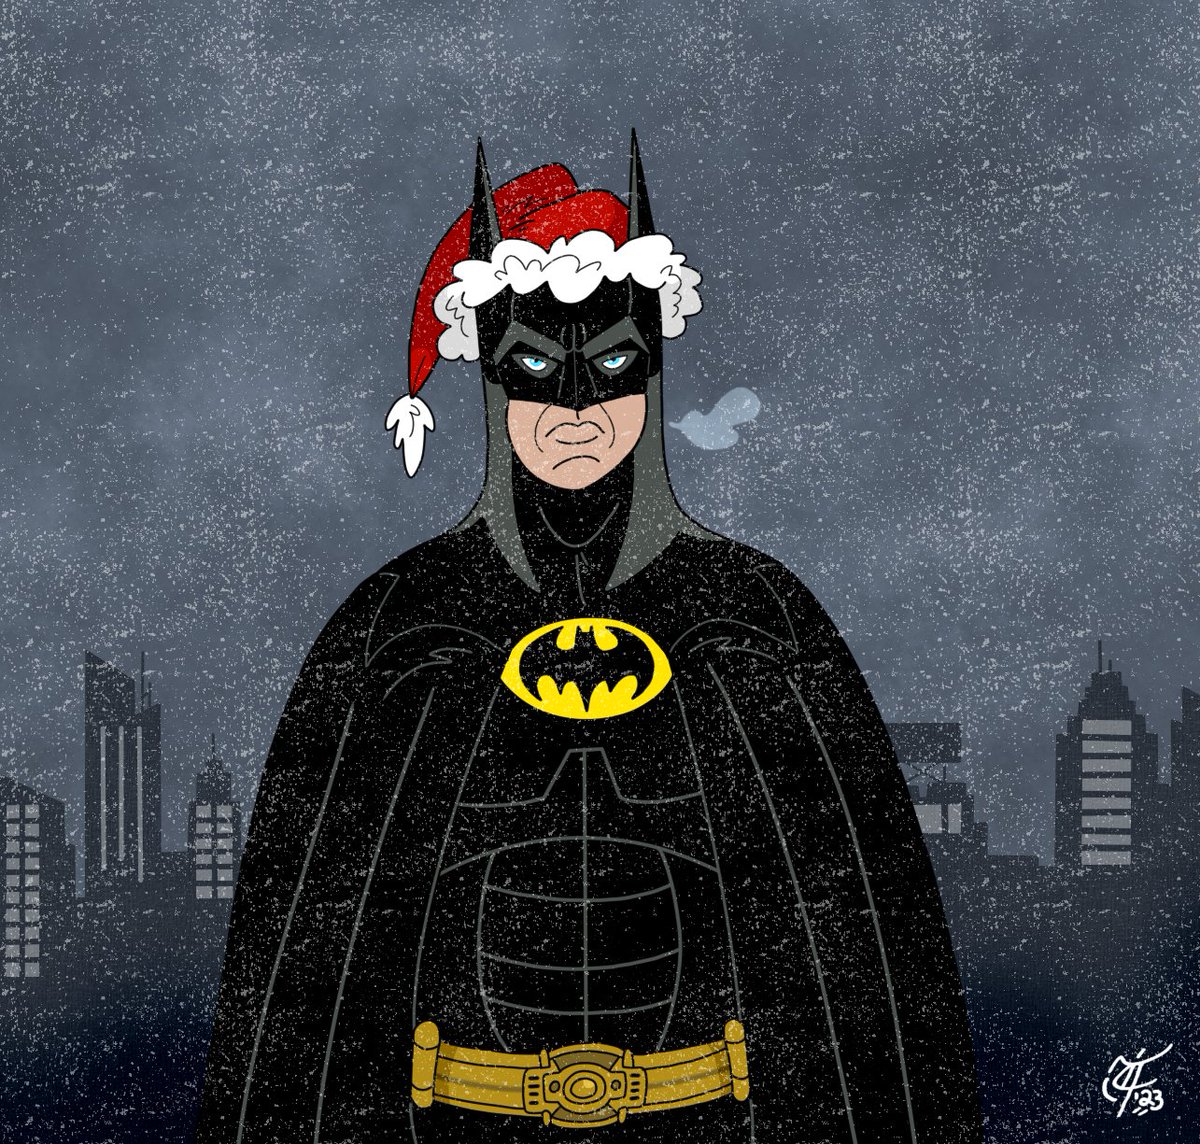 'Batman Returns' is a Christmas movie ('nuff said) 🎄❄️🎥🦇🦸😏 #HappyDrawlidays2023 #BatmanReturns #DCComics #MichaelKeaton #TimBurton #caricature #christmasmovies #90smovies #fanart #keatongivesbeatings